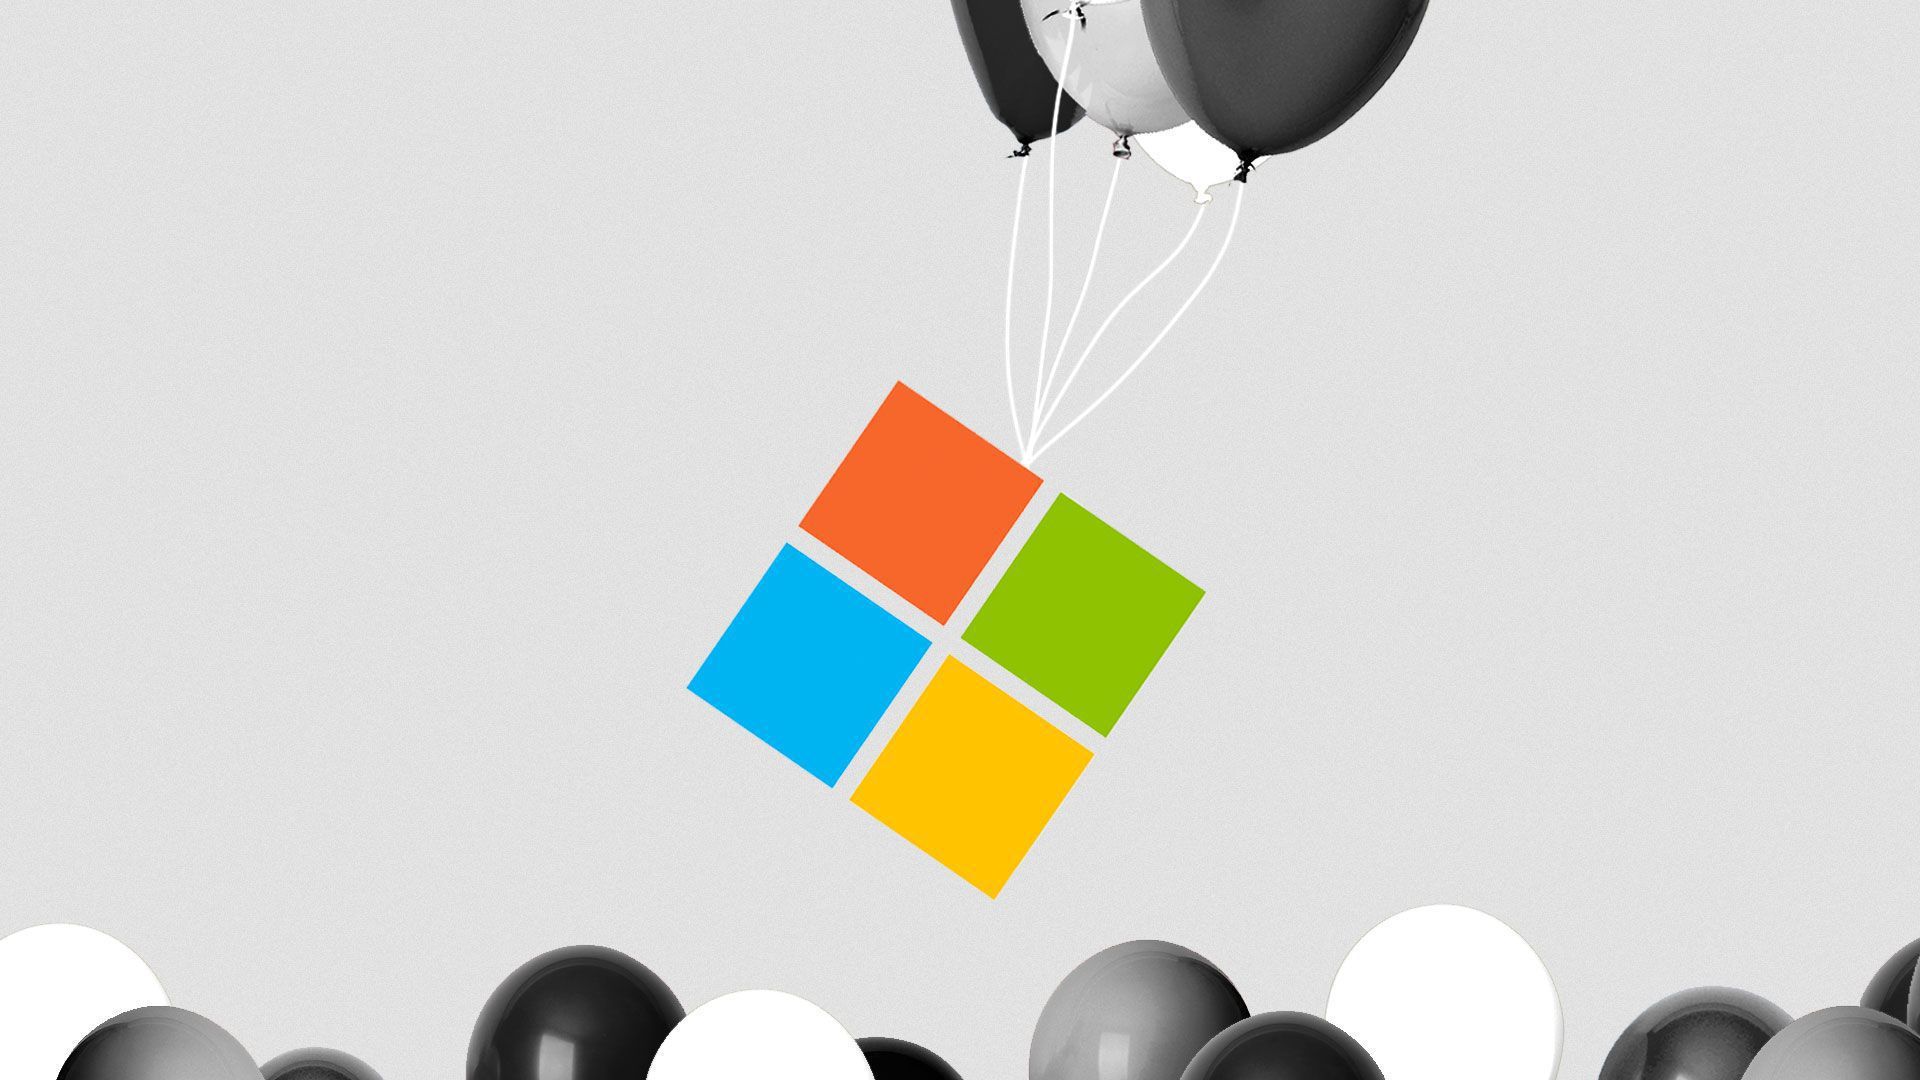 Illustration of the Microsoft logo